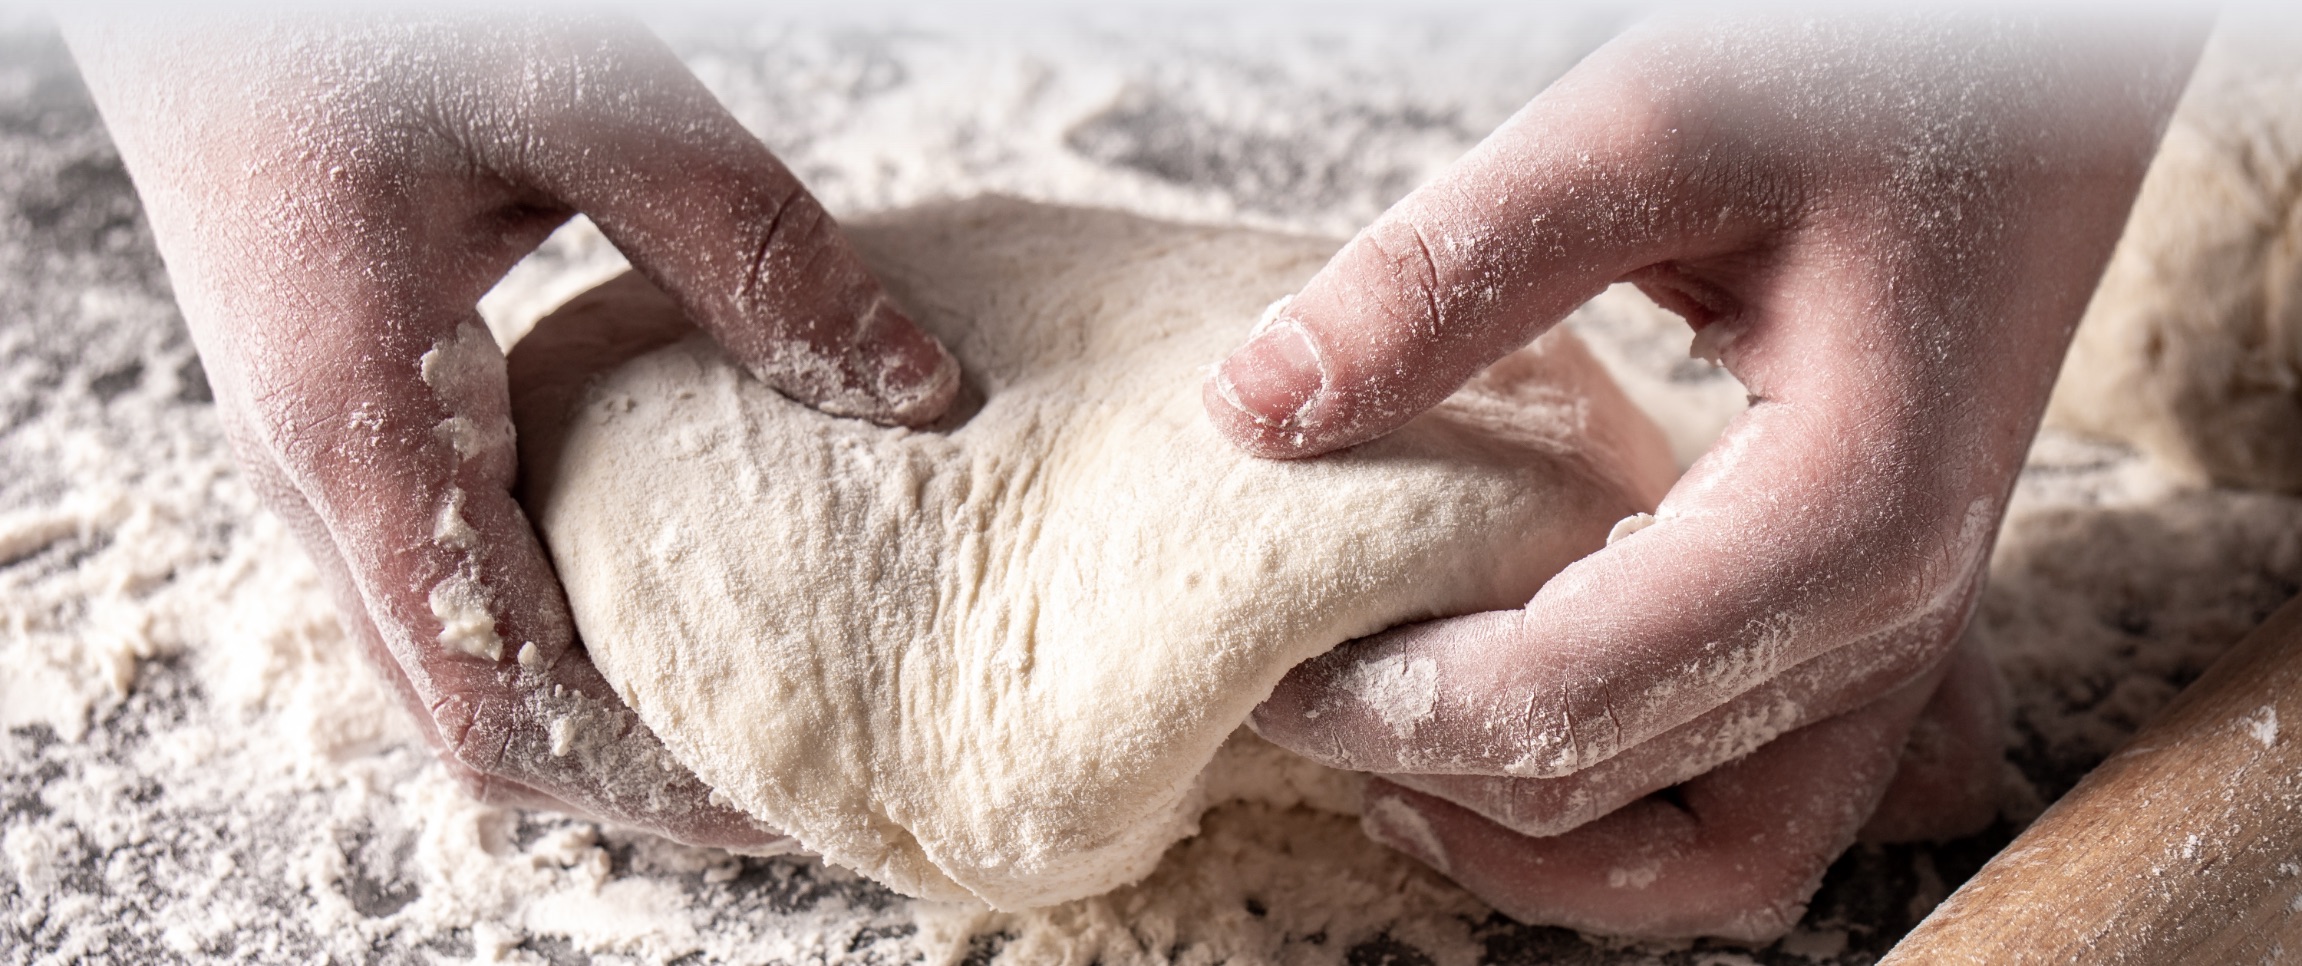 Chef kneading a ball of dough